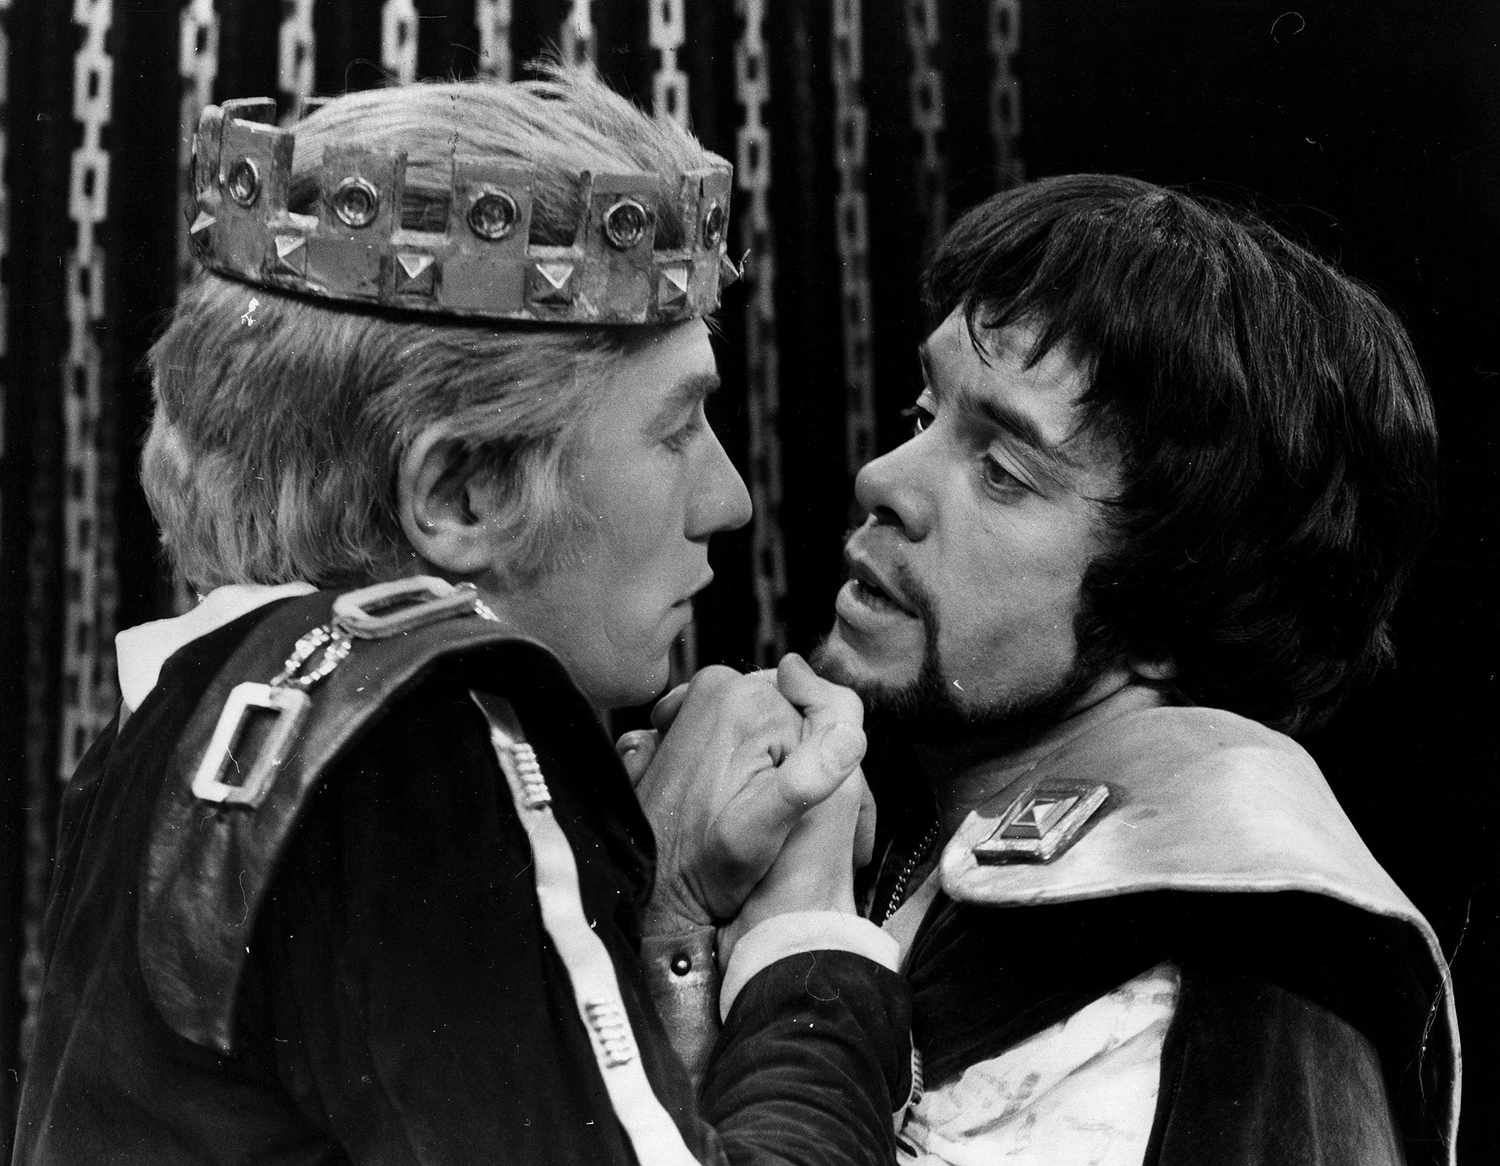 Ian McKellen and James Laurenson playing a love scene between Edward II and Gaveston